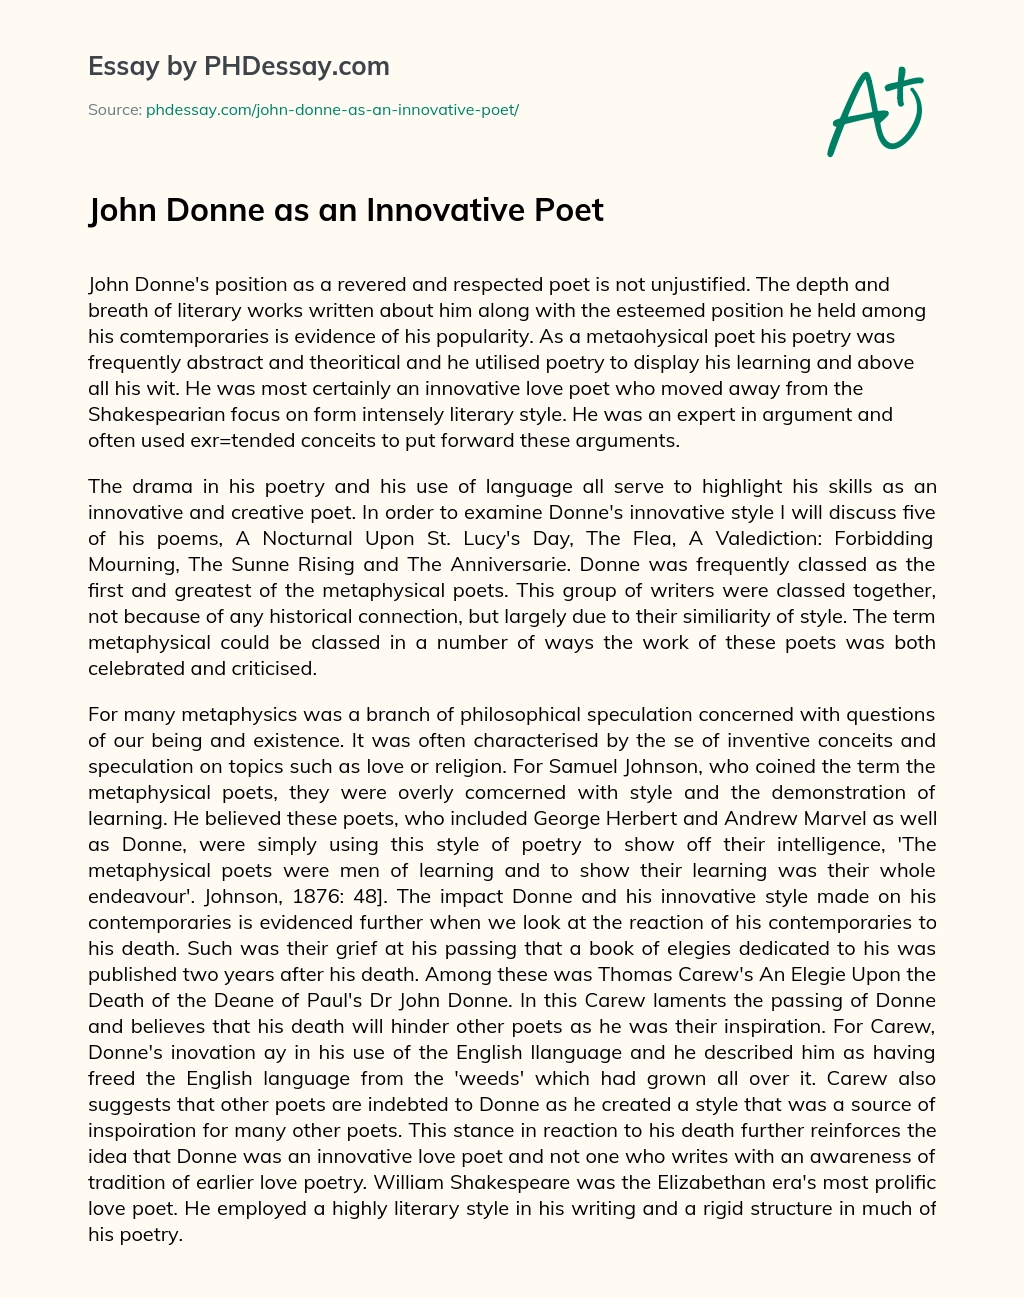 write an essay on john donne as a poet